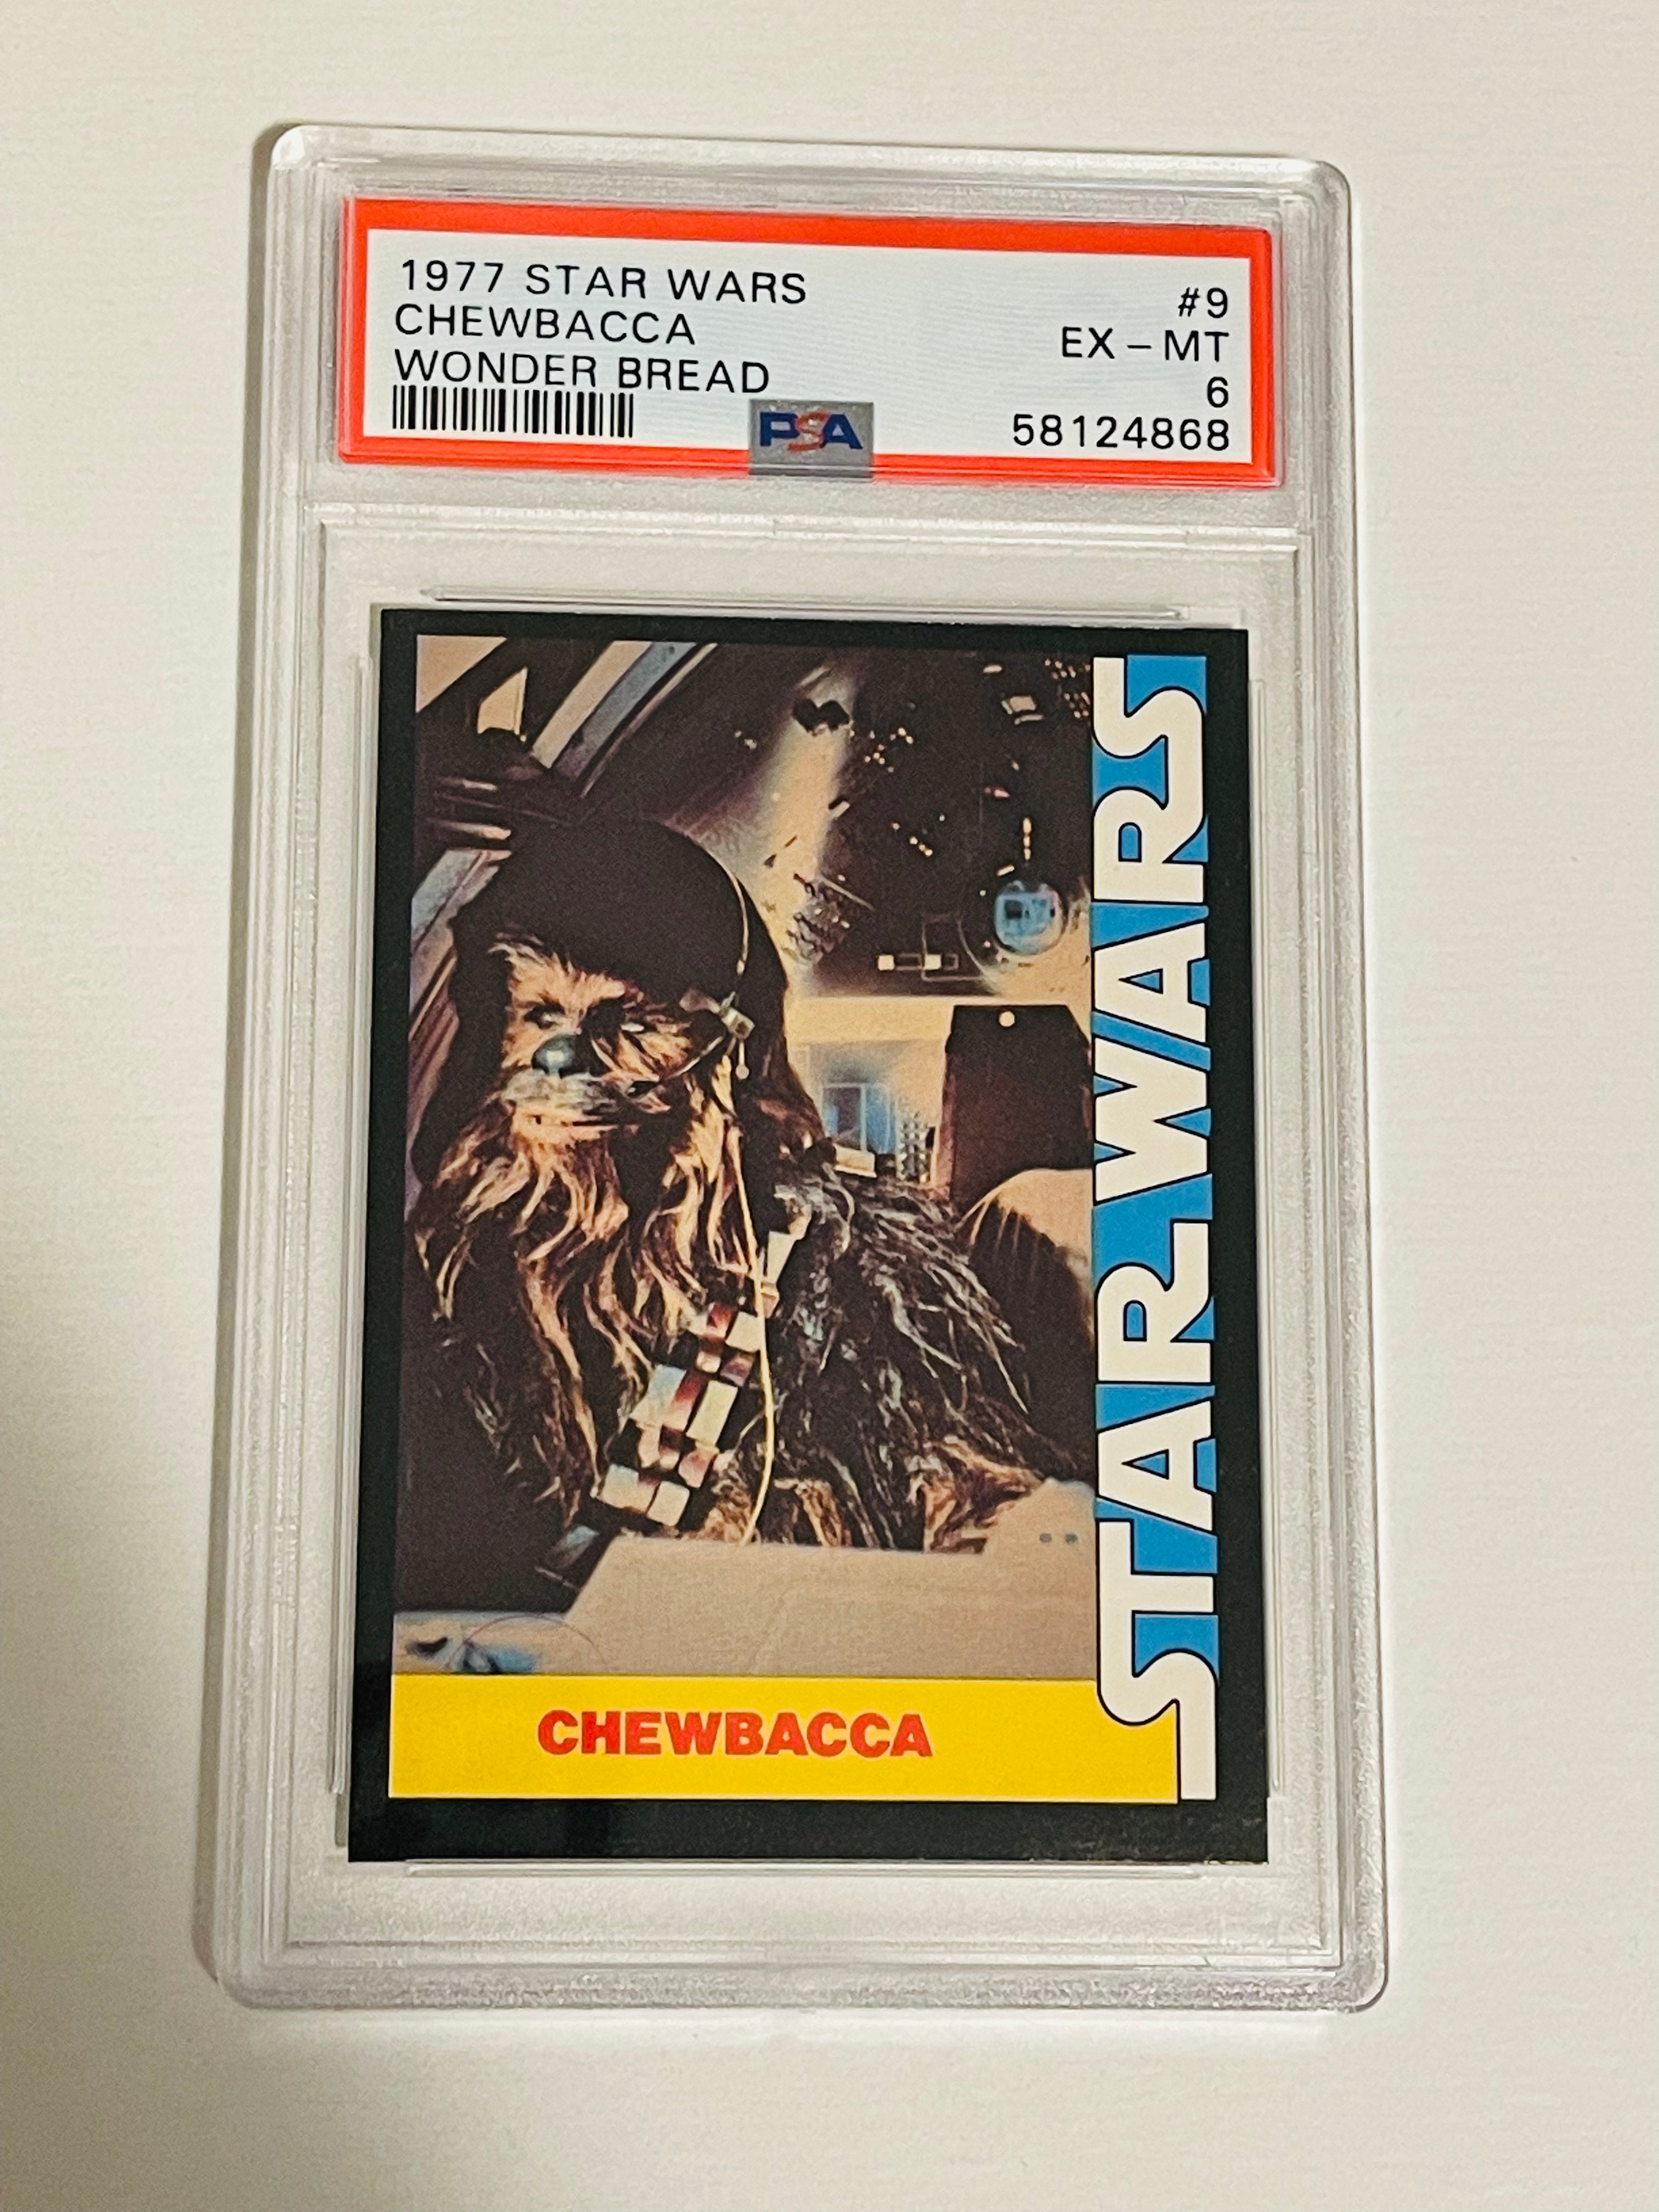 Star Wars Chewbacca wonder bread PSA 6 graded card 1977